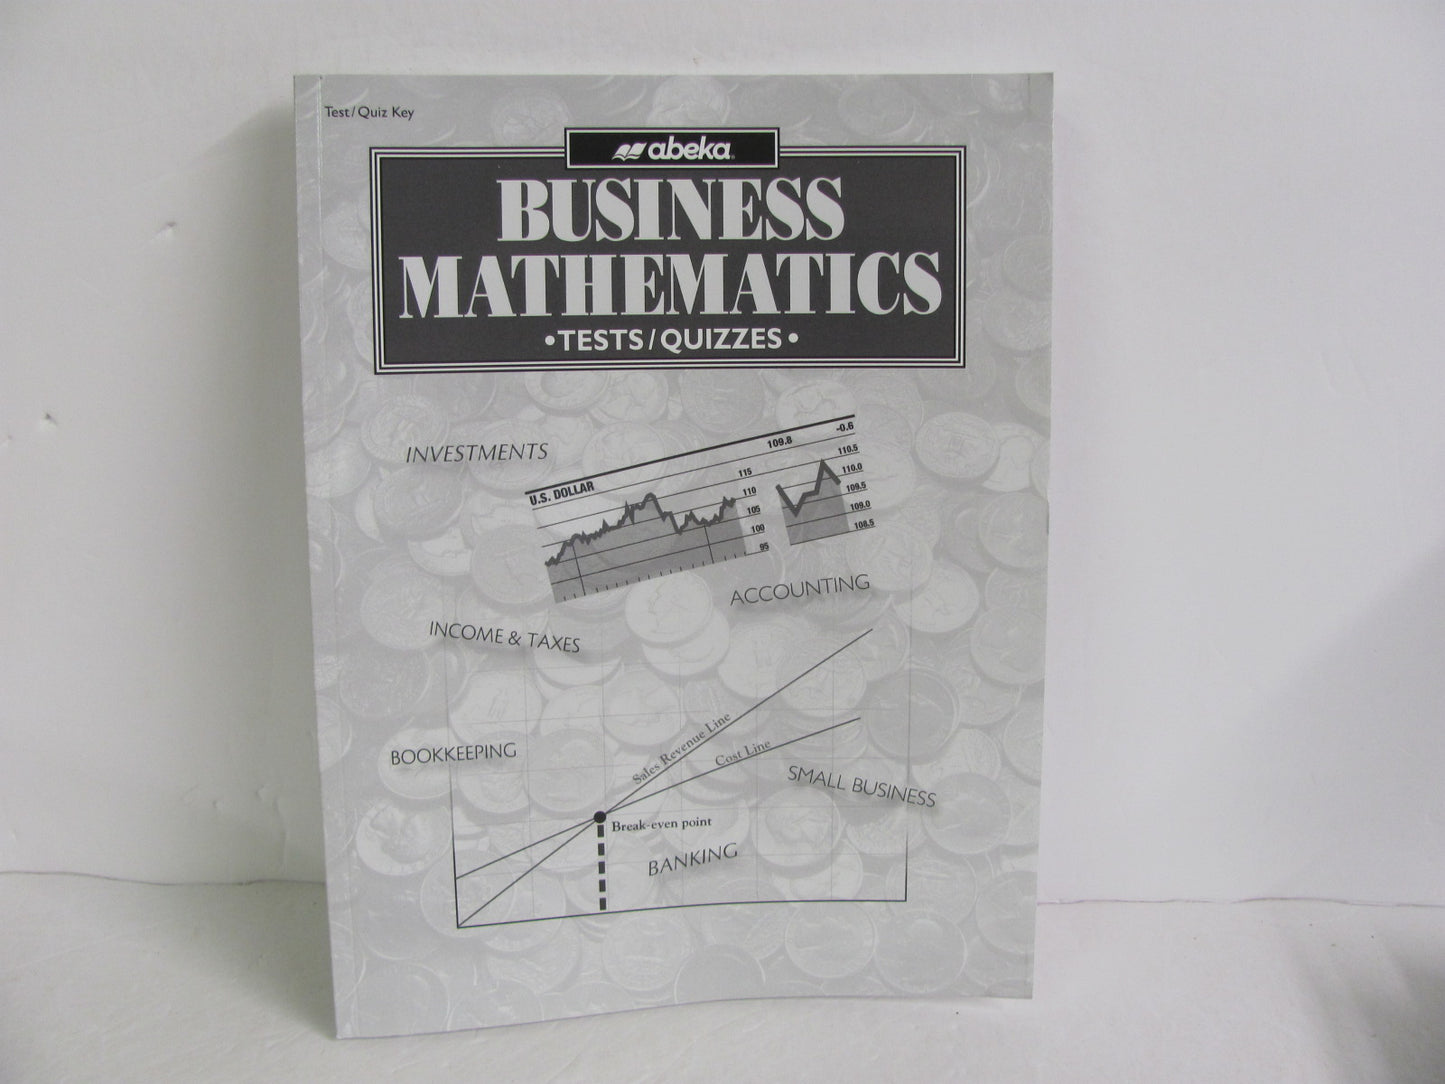 Business Math Abeka Test/Quiz Key  Pre-Owned High School Mathematics Textbooks